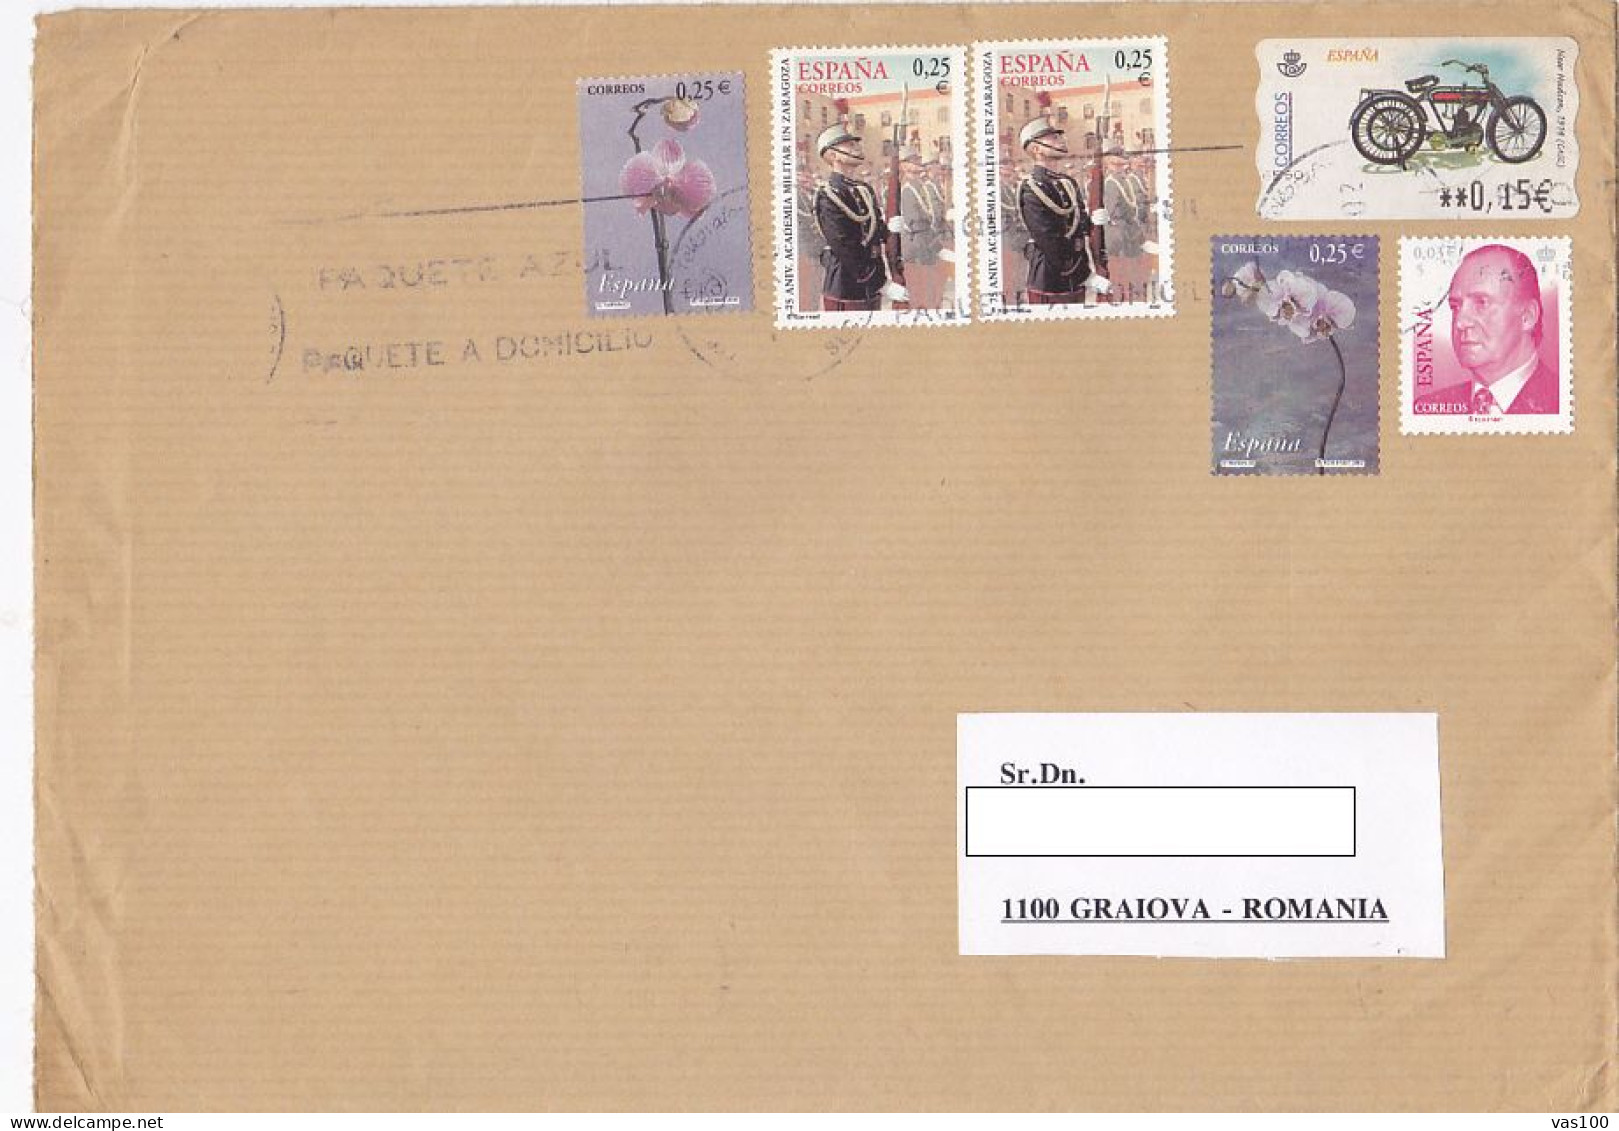 ORCHIDS, ZARAGOZA MILITARY ACADEMY, KING JUAN CARLOS, MOTORBIKE, STAMPS ON COVER, 2002, SPAIN - Brieven En Documenten